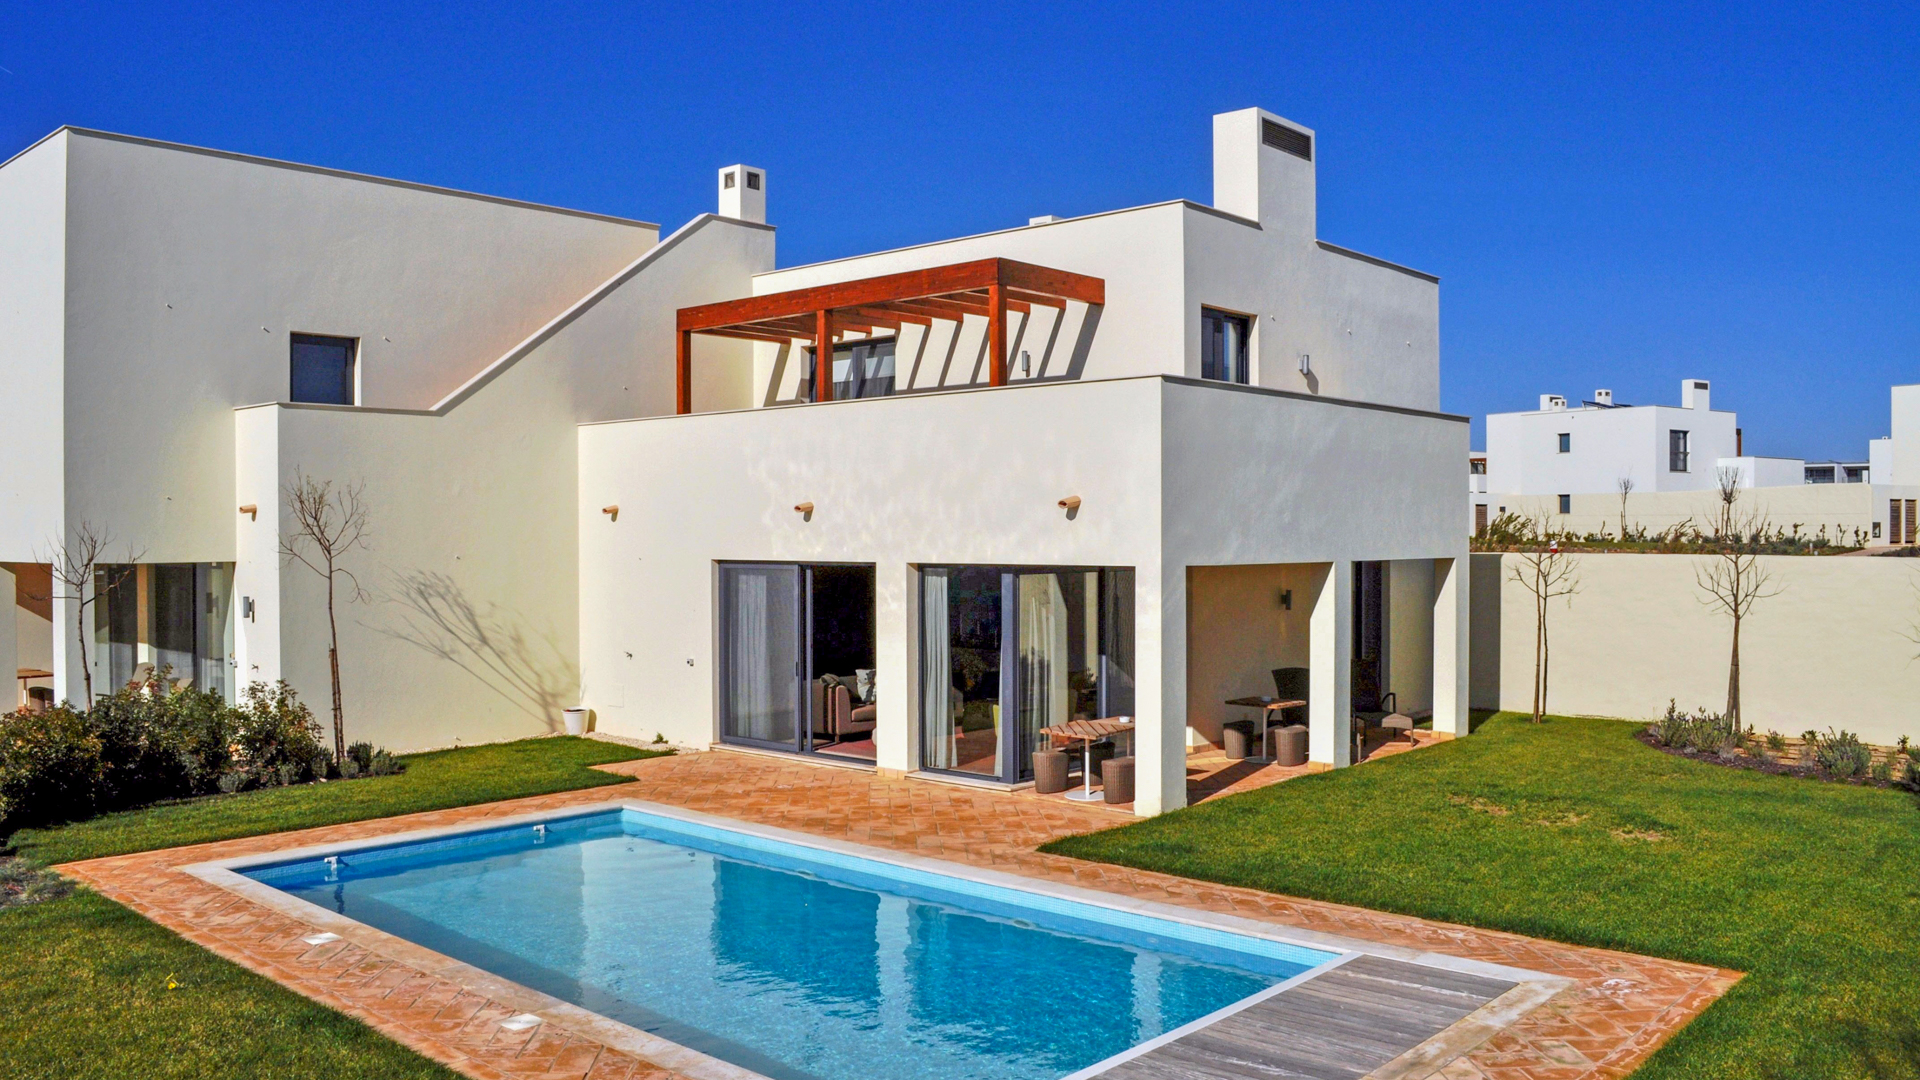 2 and 3 bedroom villas on Luxury Beach Resort - Pinewood Villas, Sagres | LG95 